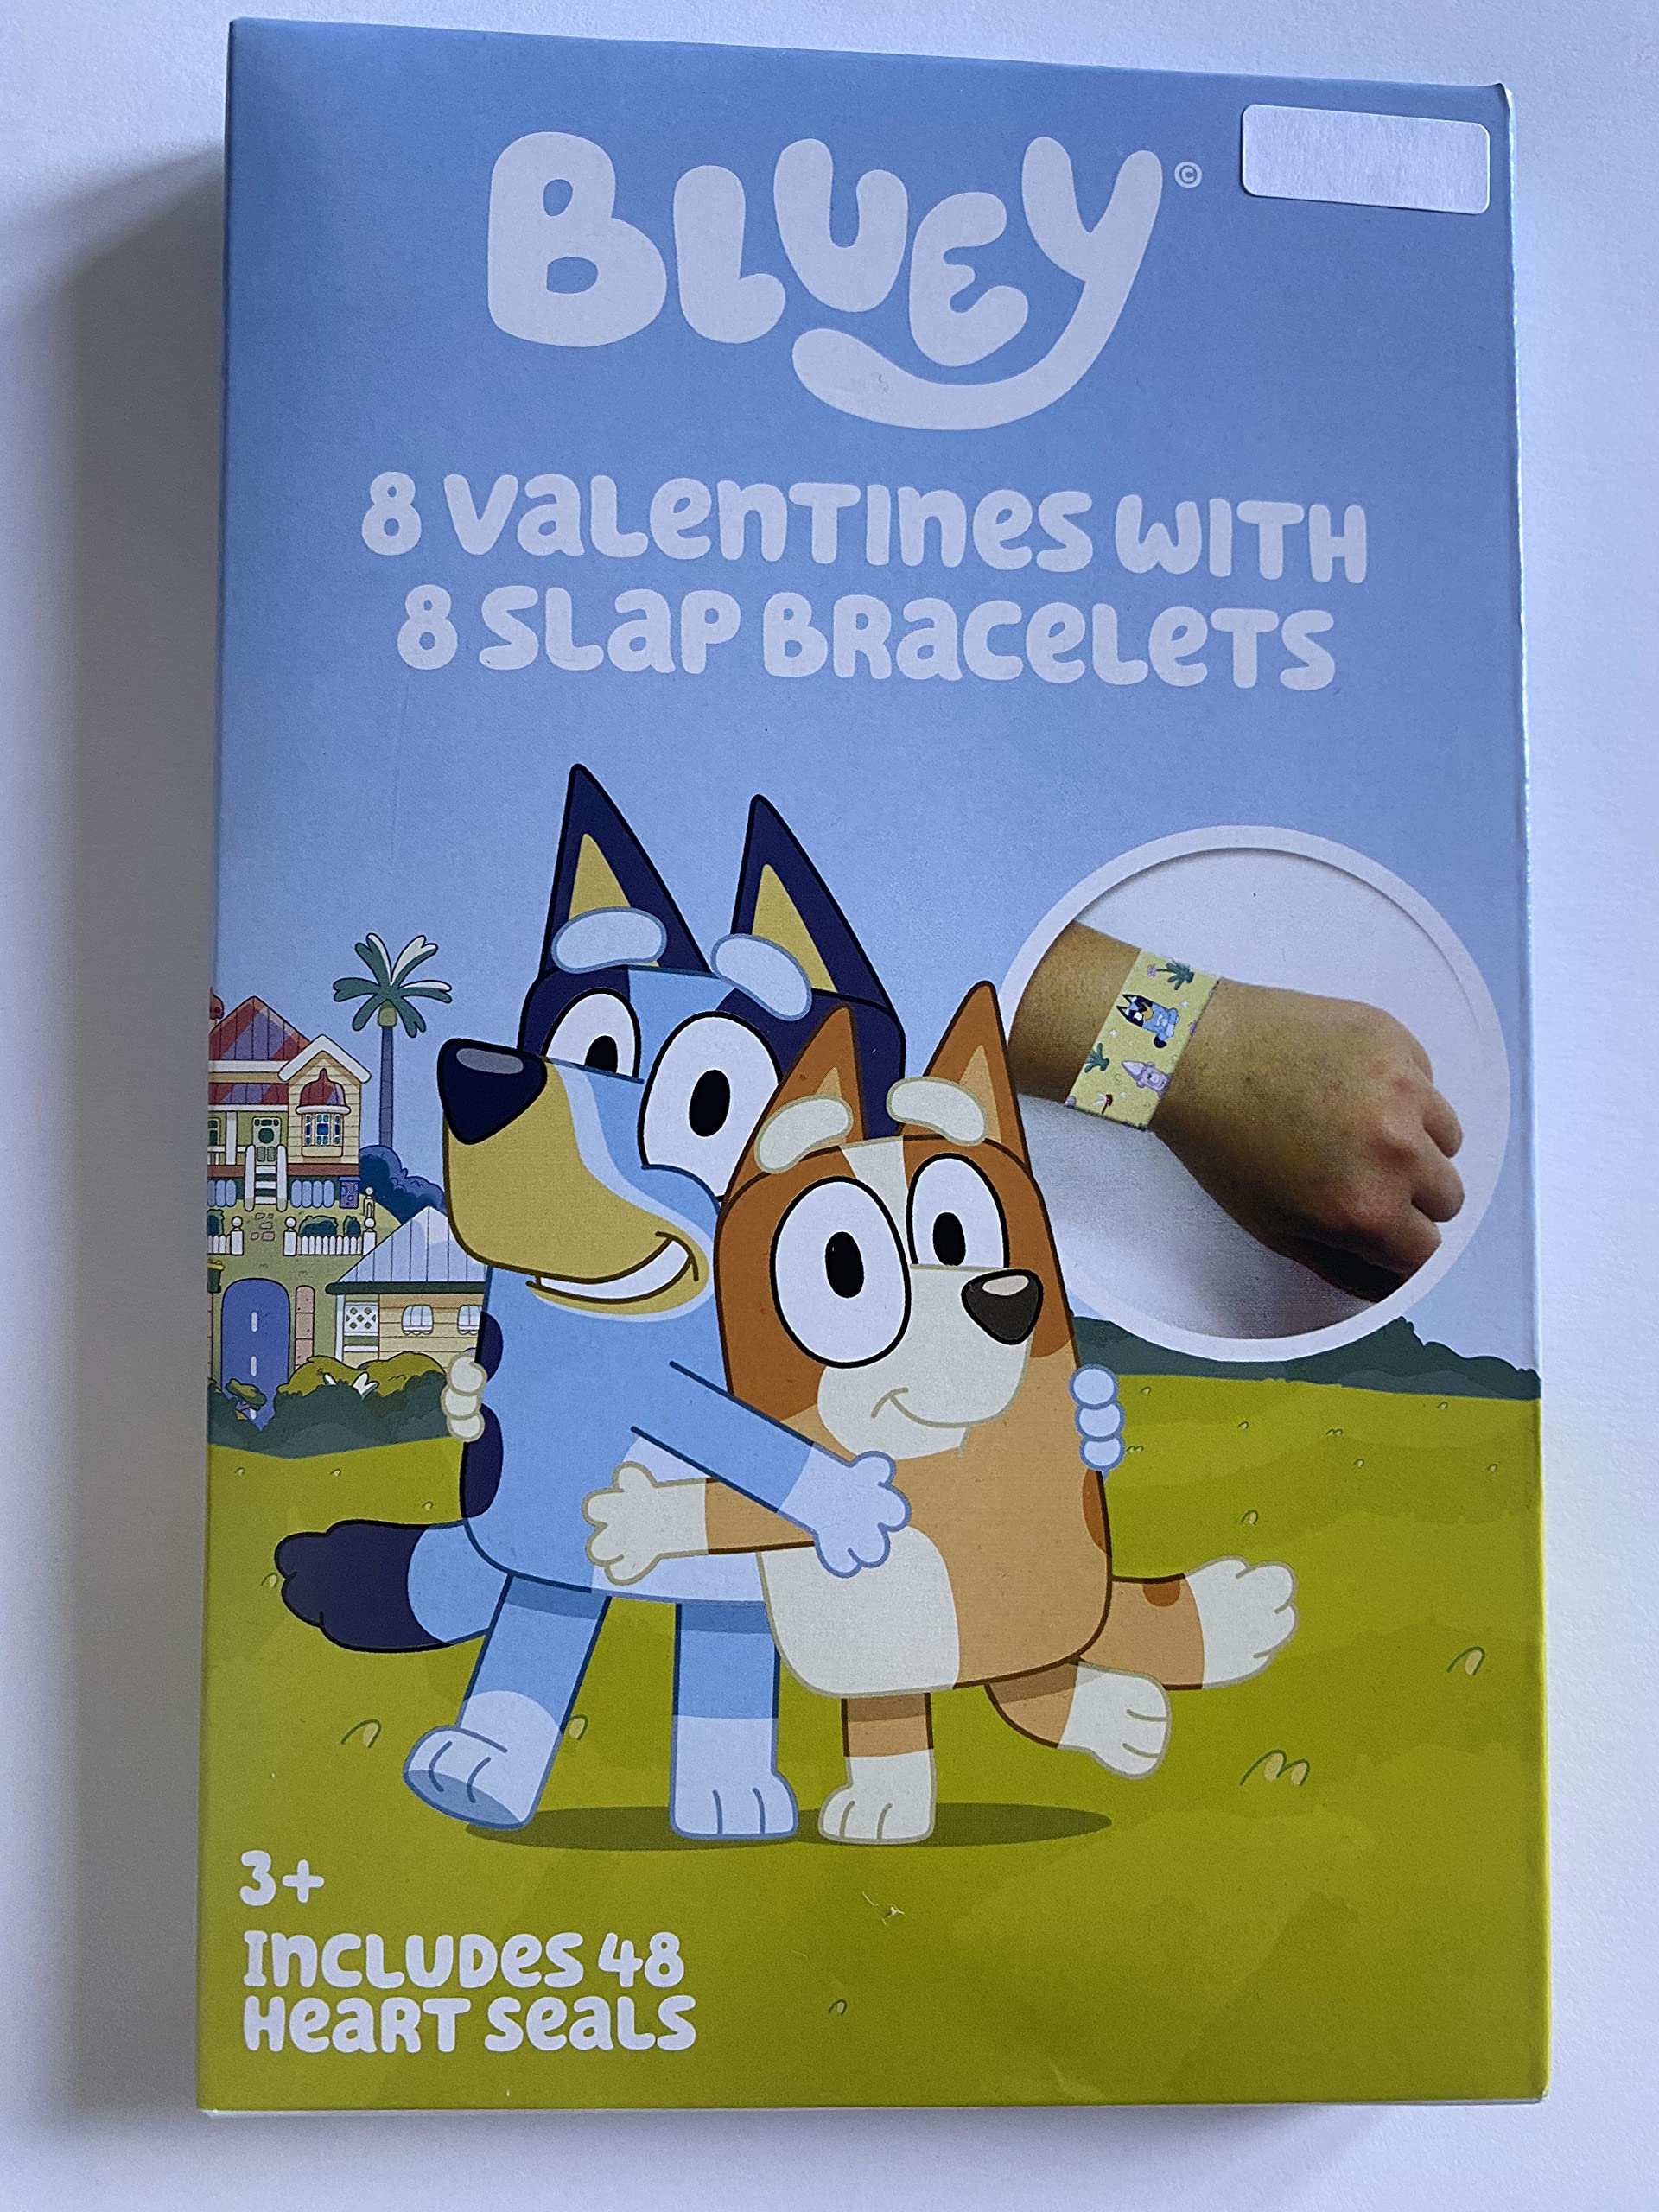 8 Bluey Valentines with 8 Slap Bracelets